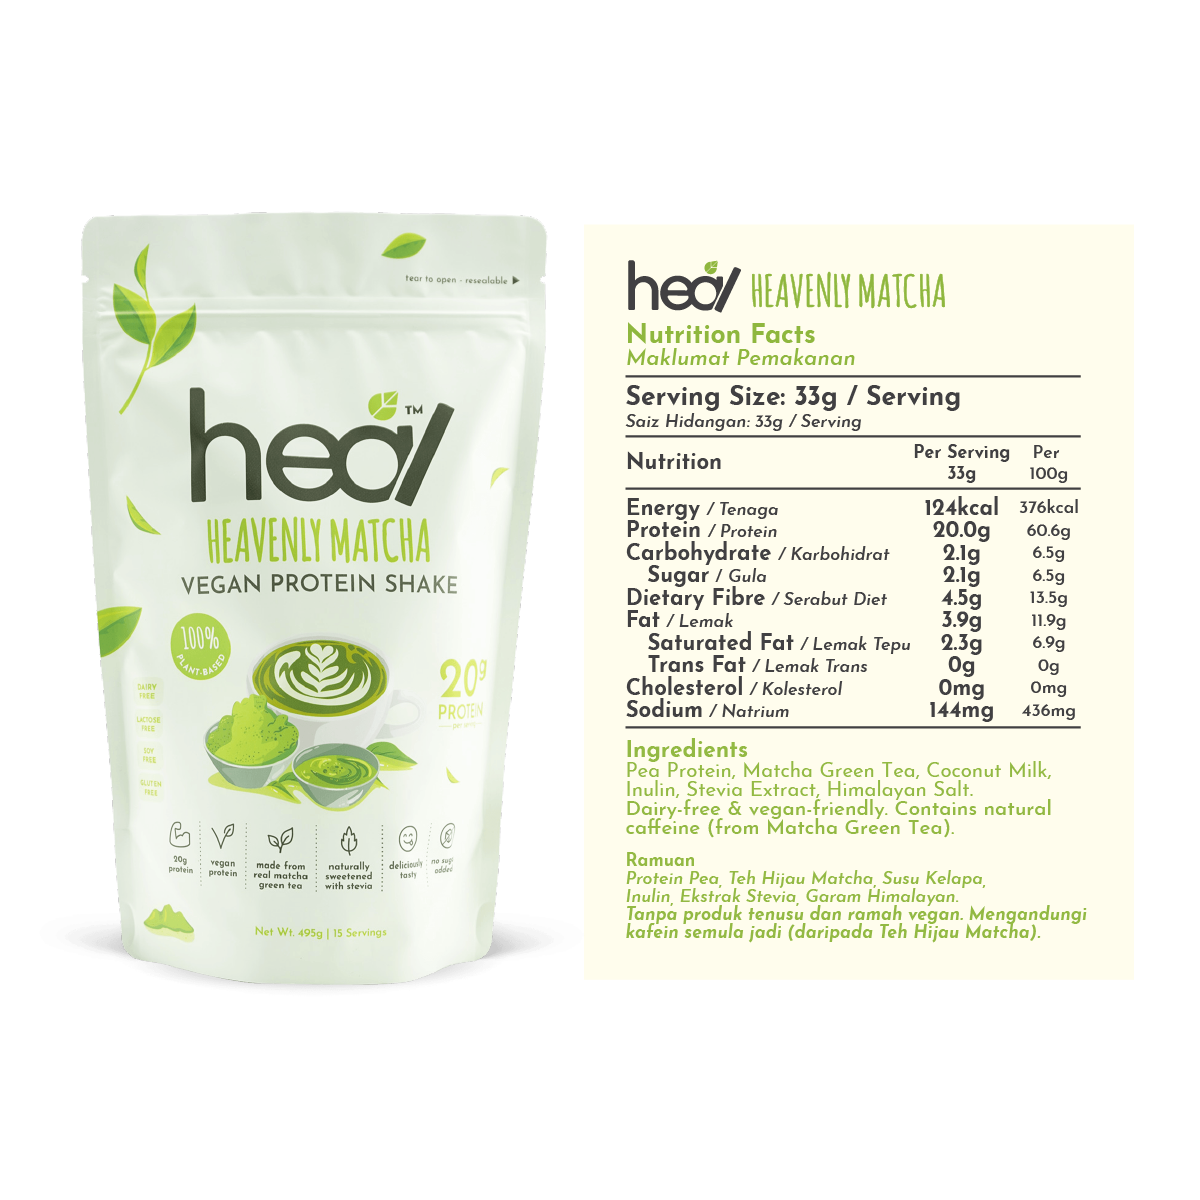 Heal Heavenly Matcha Vegan Protein Shake, 15 Servings Value Pack